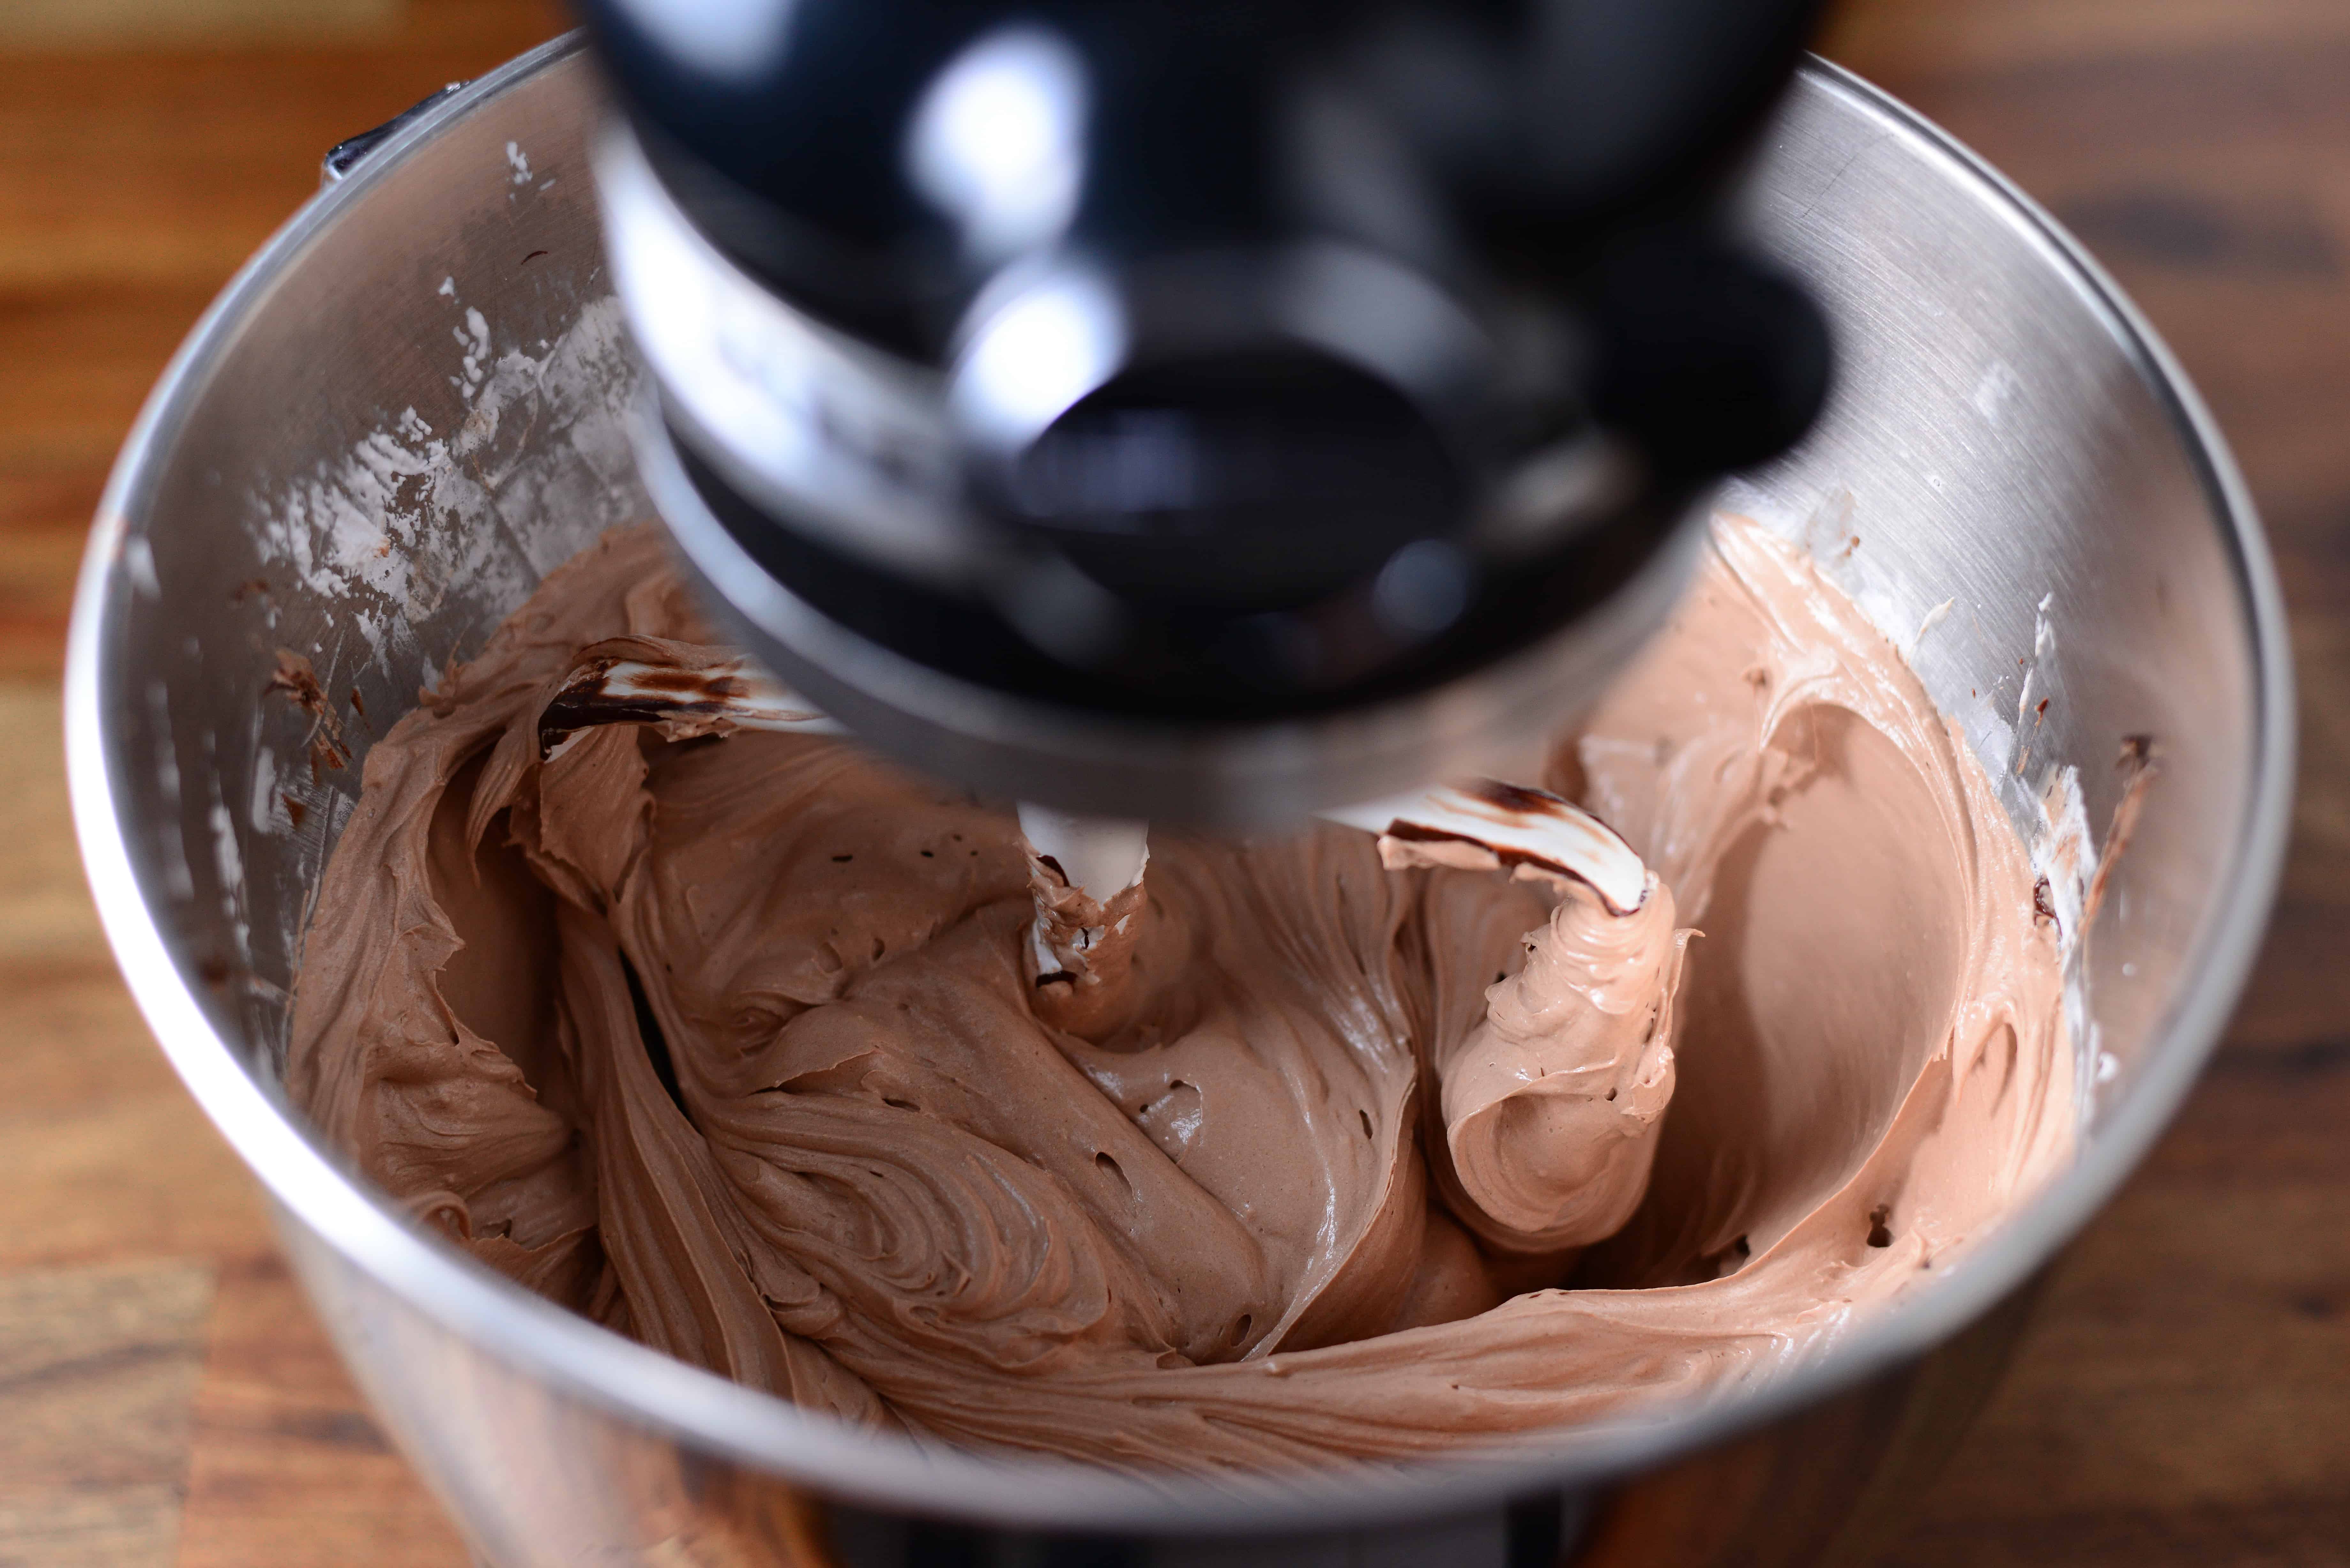 chocolate mixing into the meringue